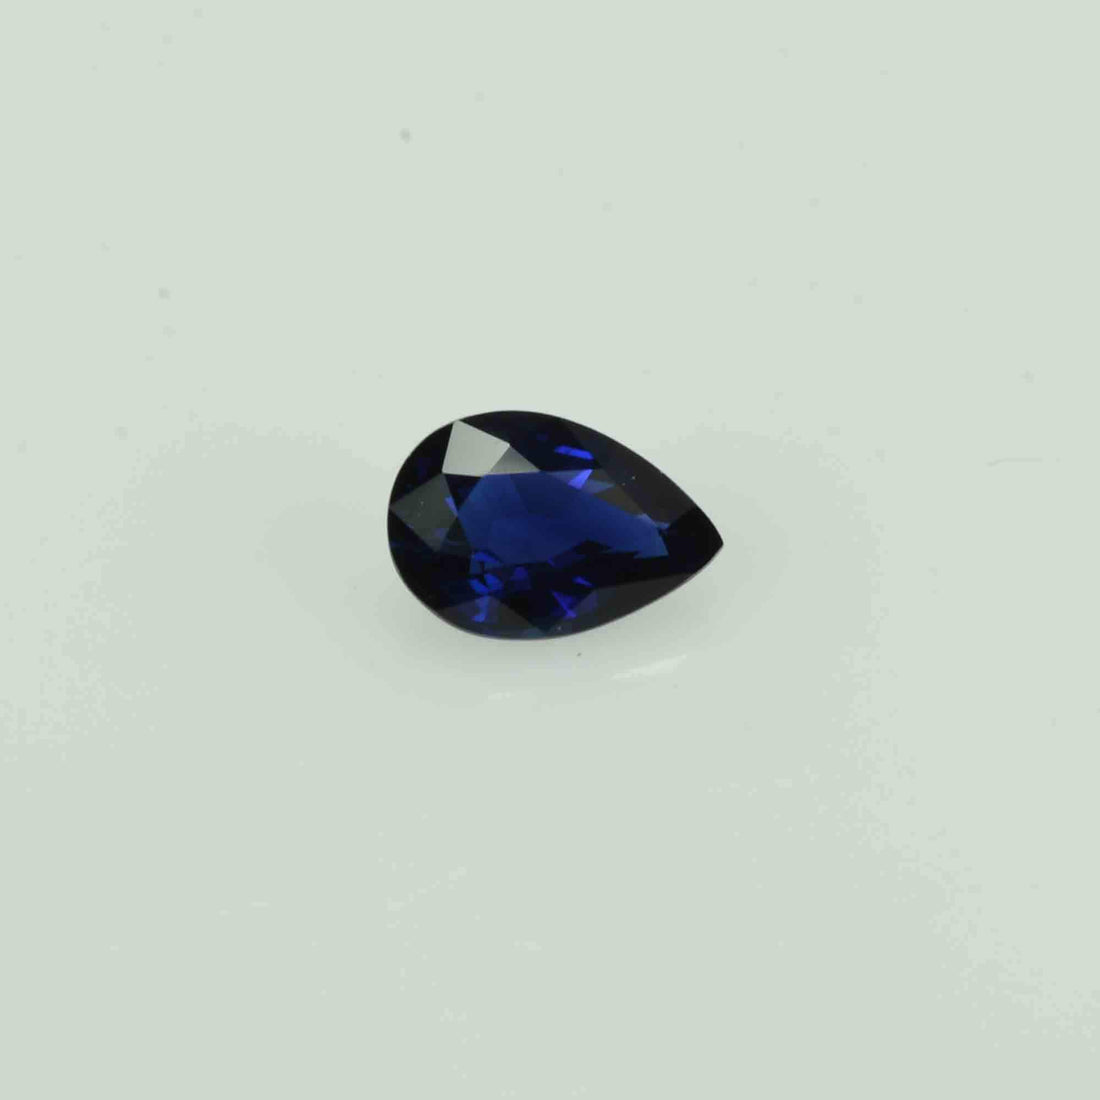 0.32 cts Natural Blue Sapphire Loose Gemstone Pear Cut